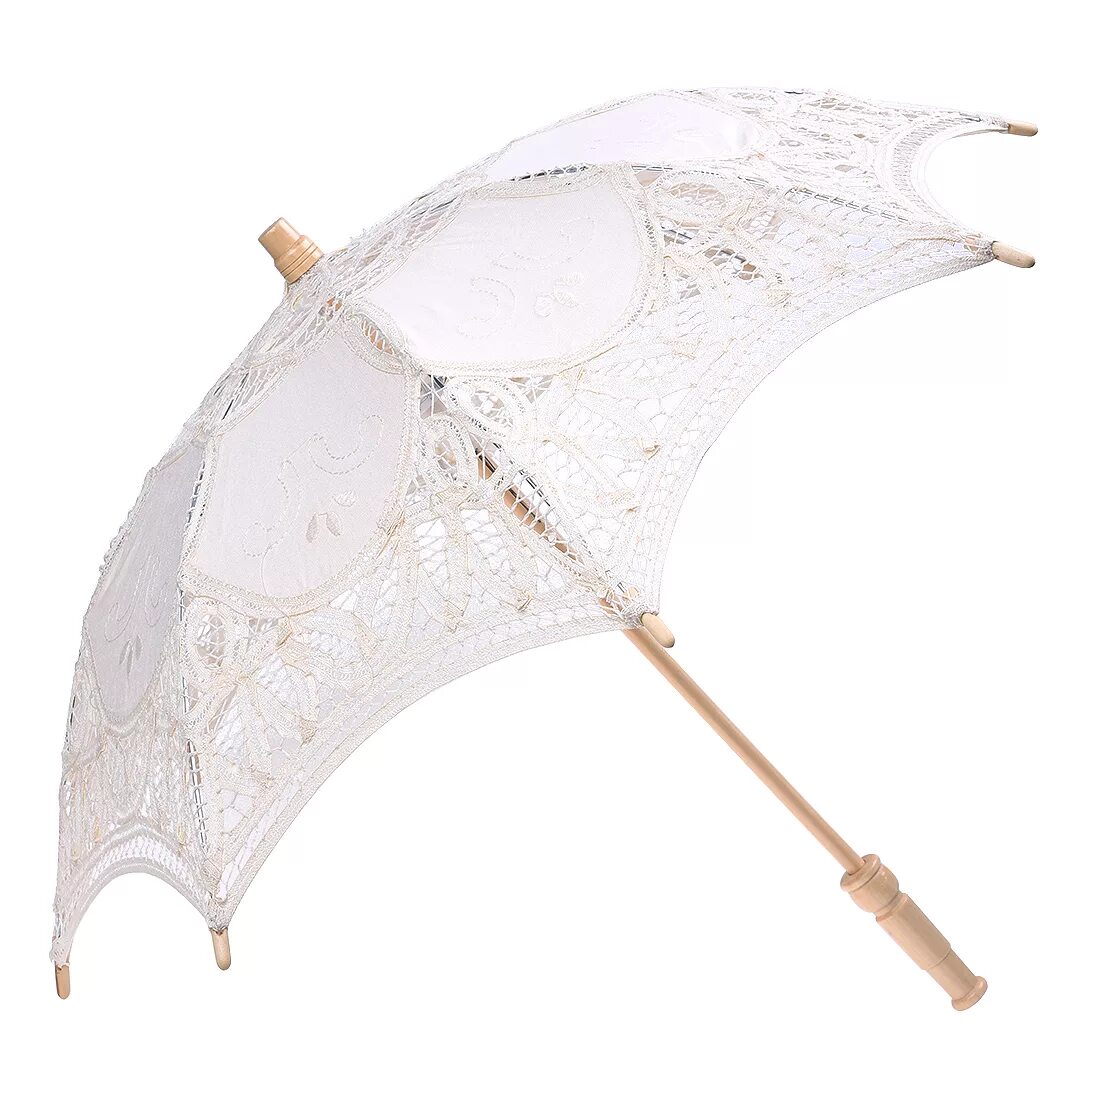 Зонт от солнца кружевной. Парасоль зонт от солнца. Парасоль зонт кружевной. Зонтик от солнца парасоль. Зонтик от солнца женский.